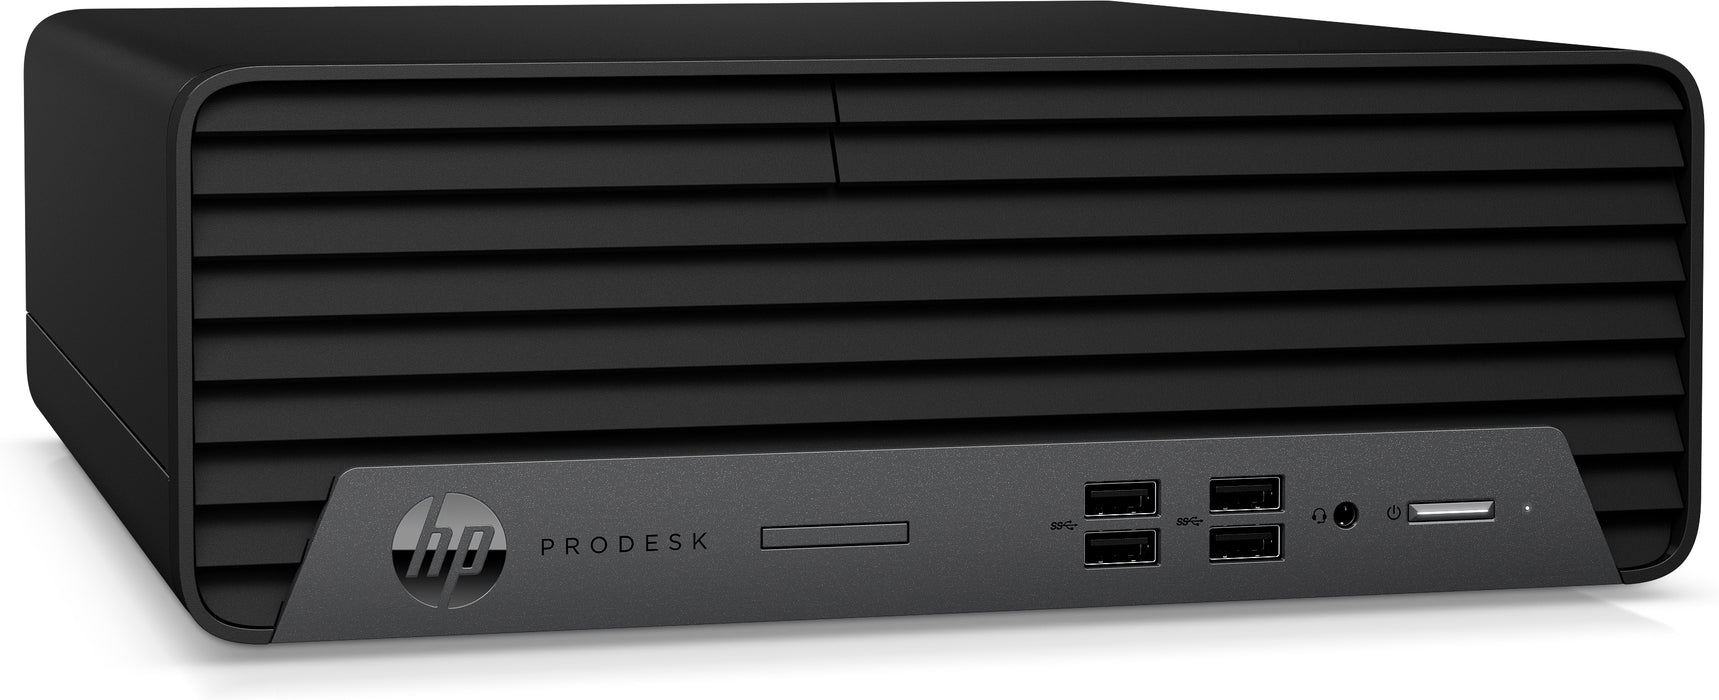 HP ProDesk 405 G6, 3.7 GHz, AMD Ryzen™ 5, 8 GB, 256 GB, DVD±RW, Windows 10 Pro